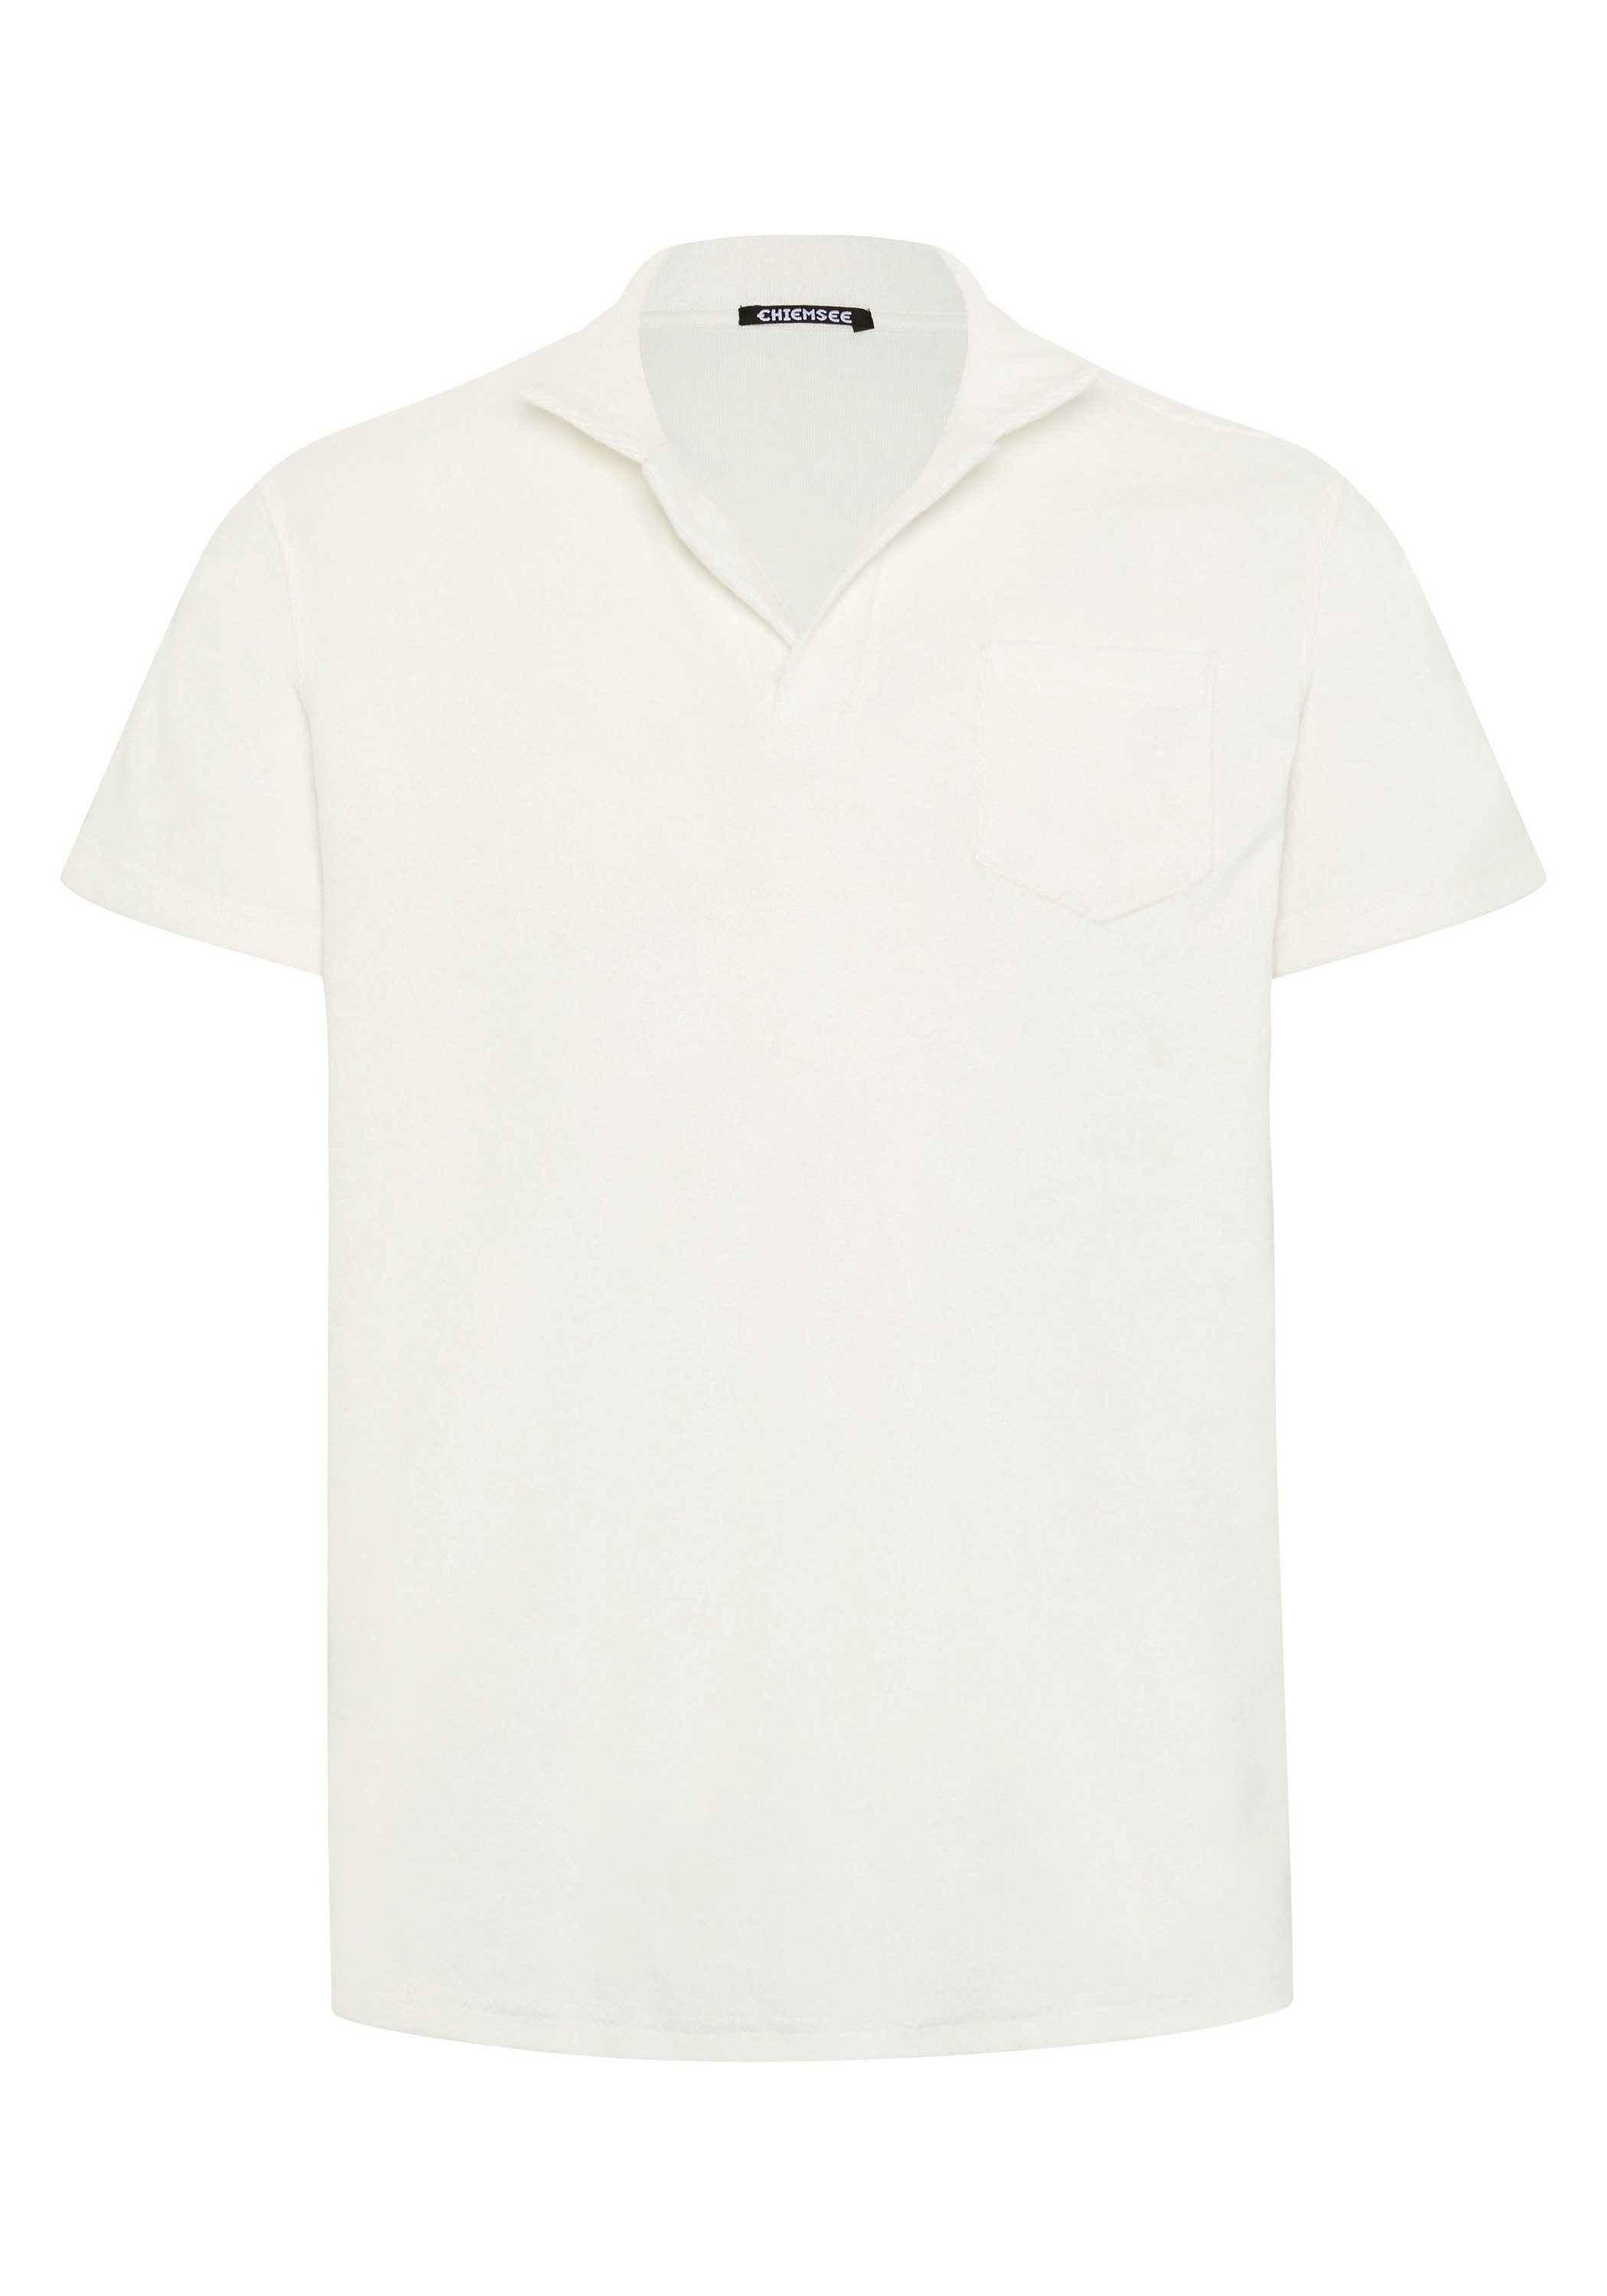 Poloshirt im Star 1 modernen 11-4202 Poloshirt Chiemsee Frottee-Look White